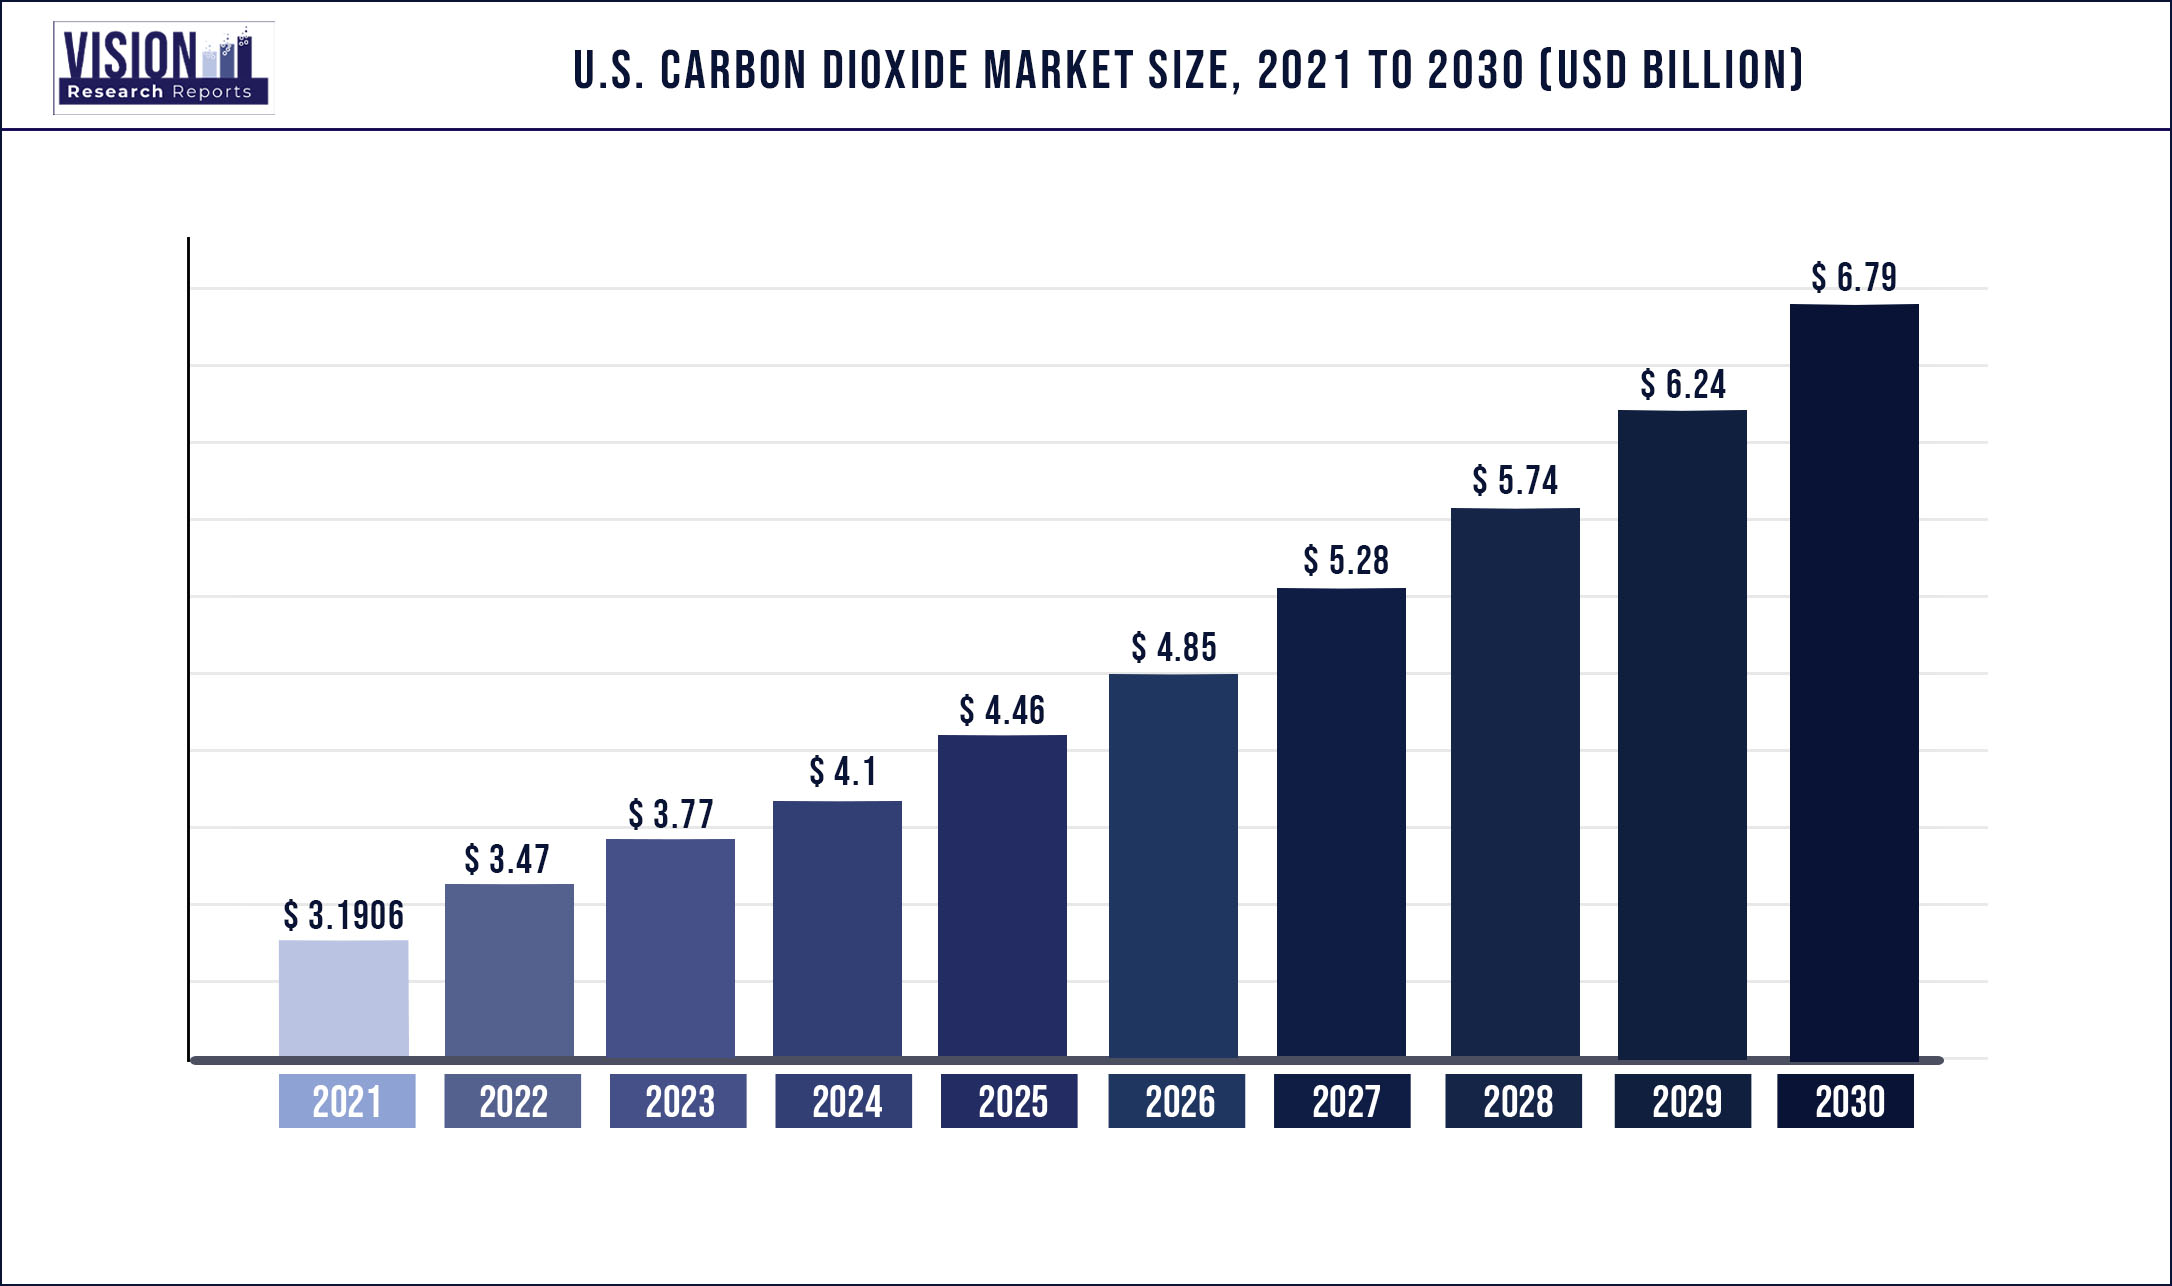 U.S. Carbon Dioxide Market Size 2021 to 2030